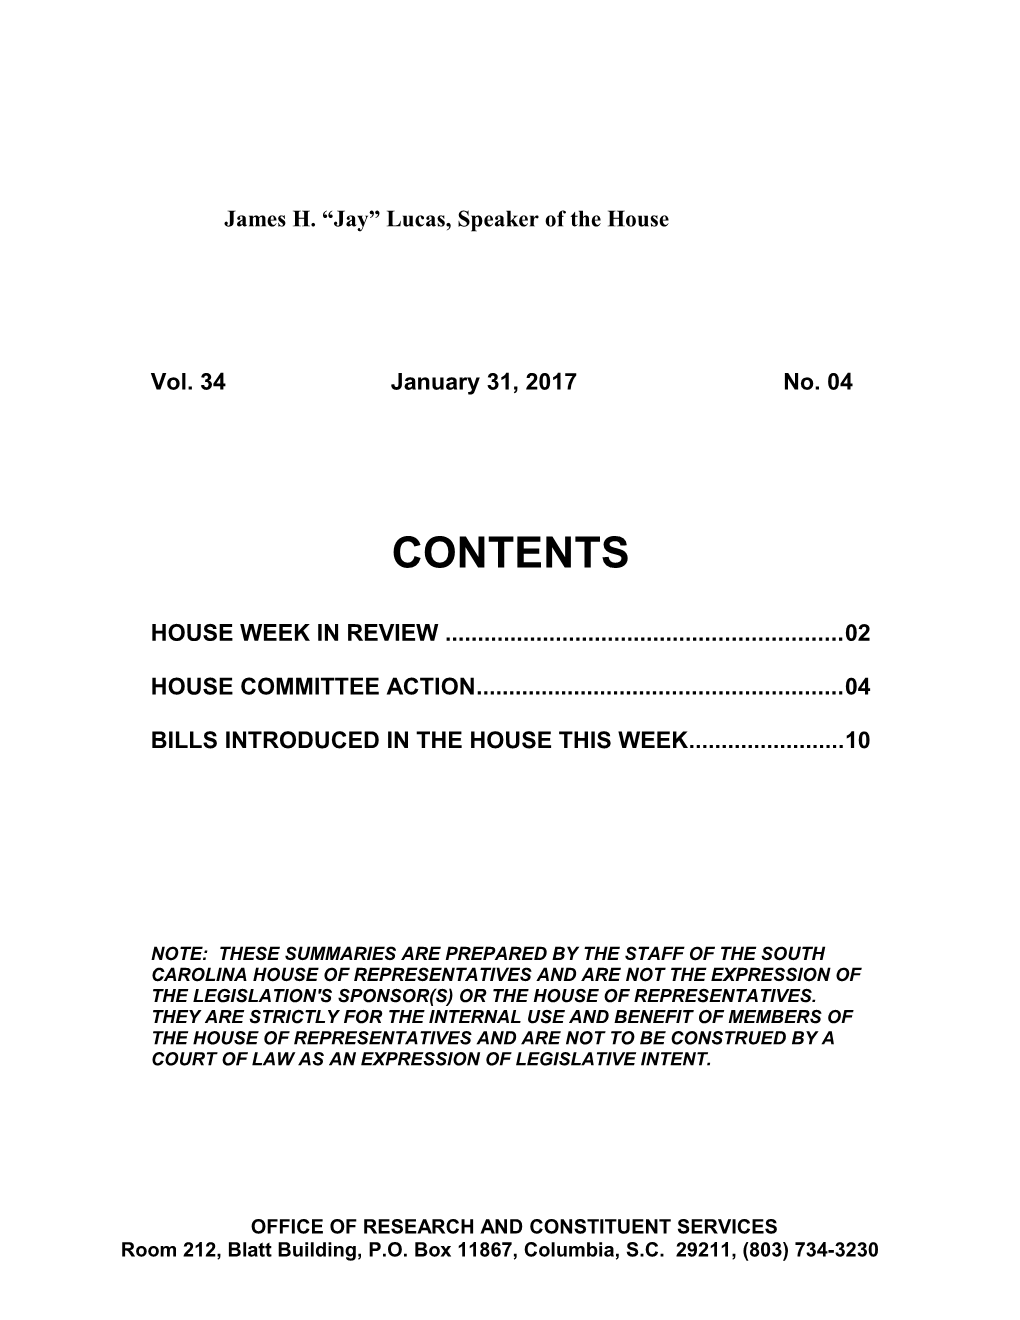 Legislative Update - Vol.34 No. 04 January 31, 2017 - South Carolina Legislature Online